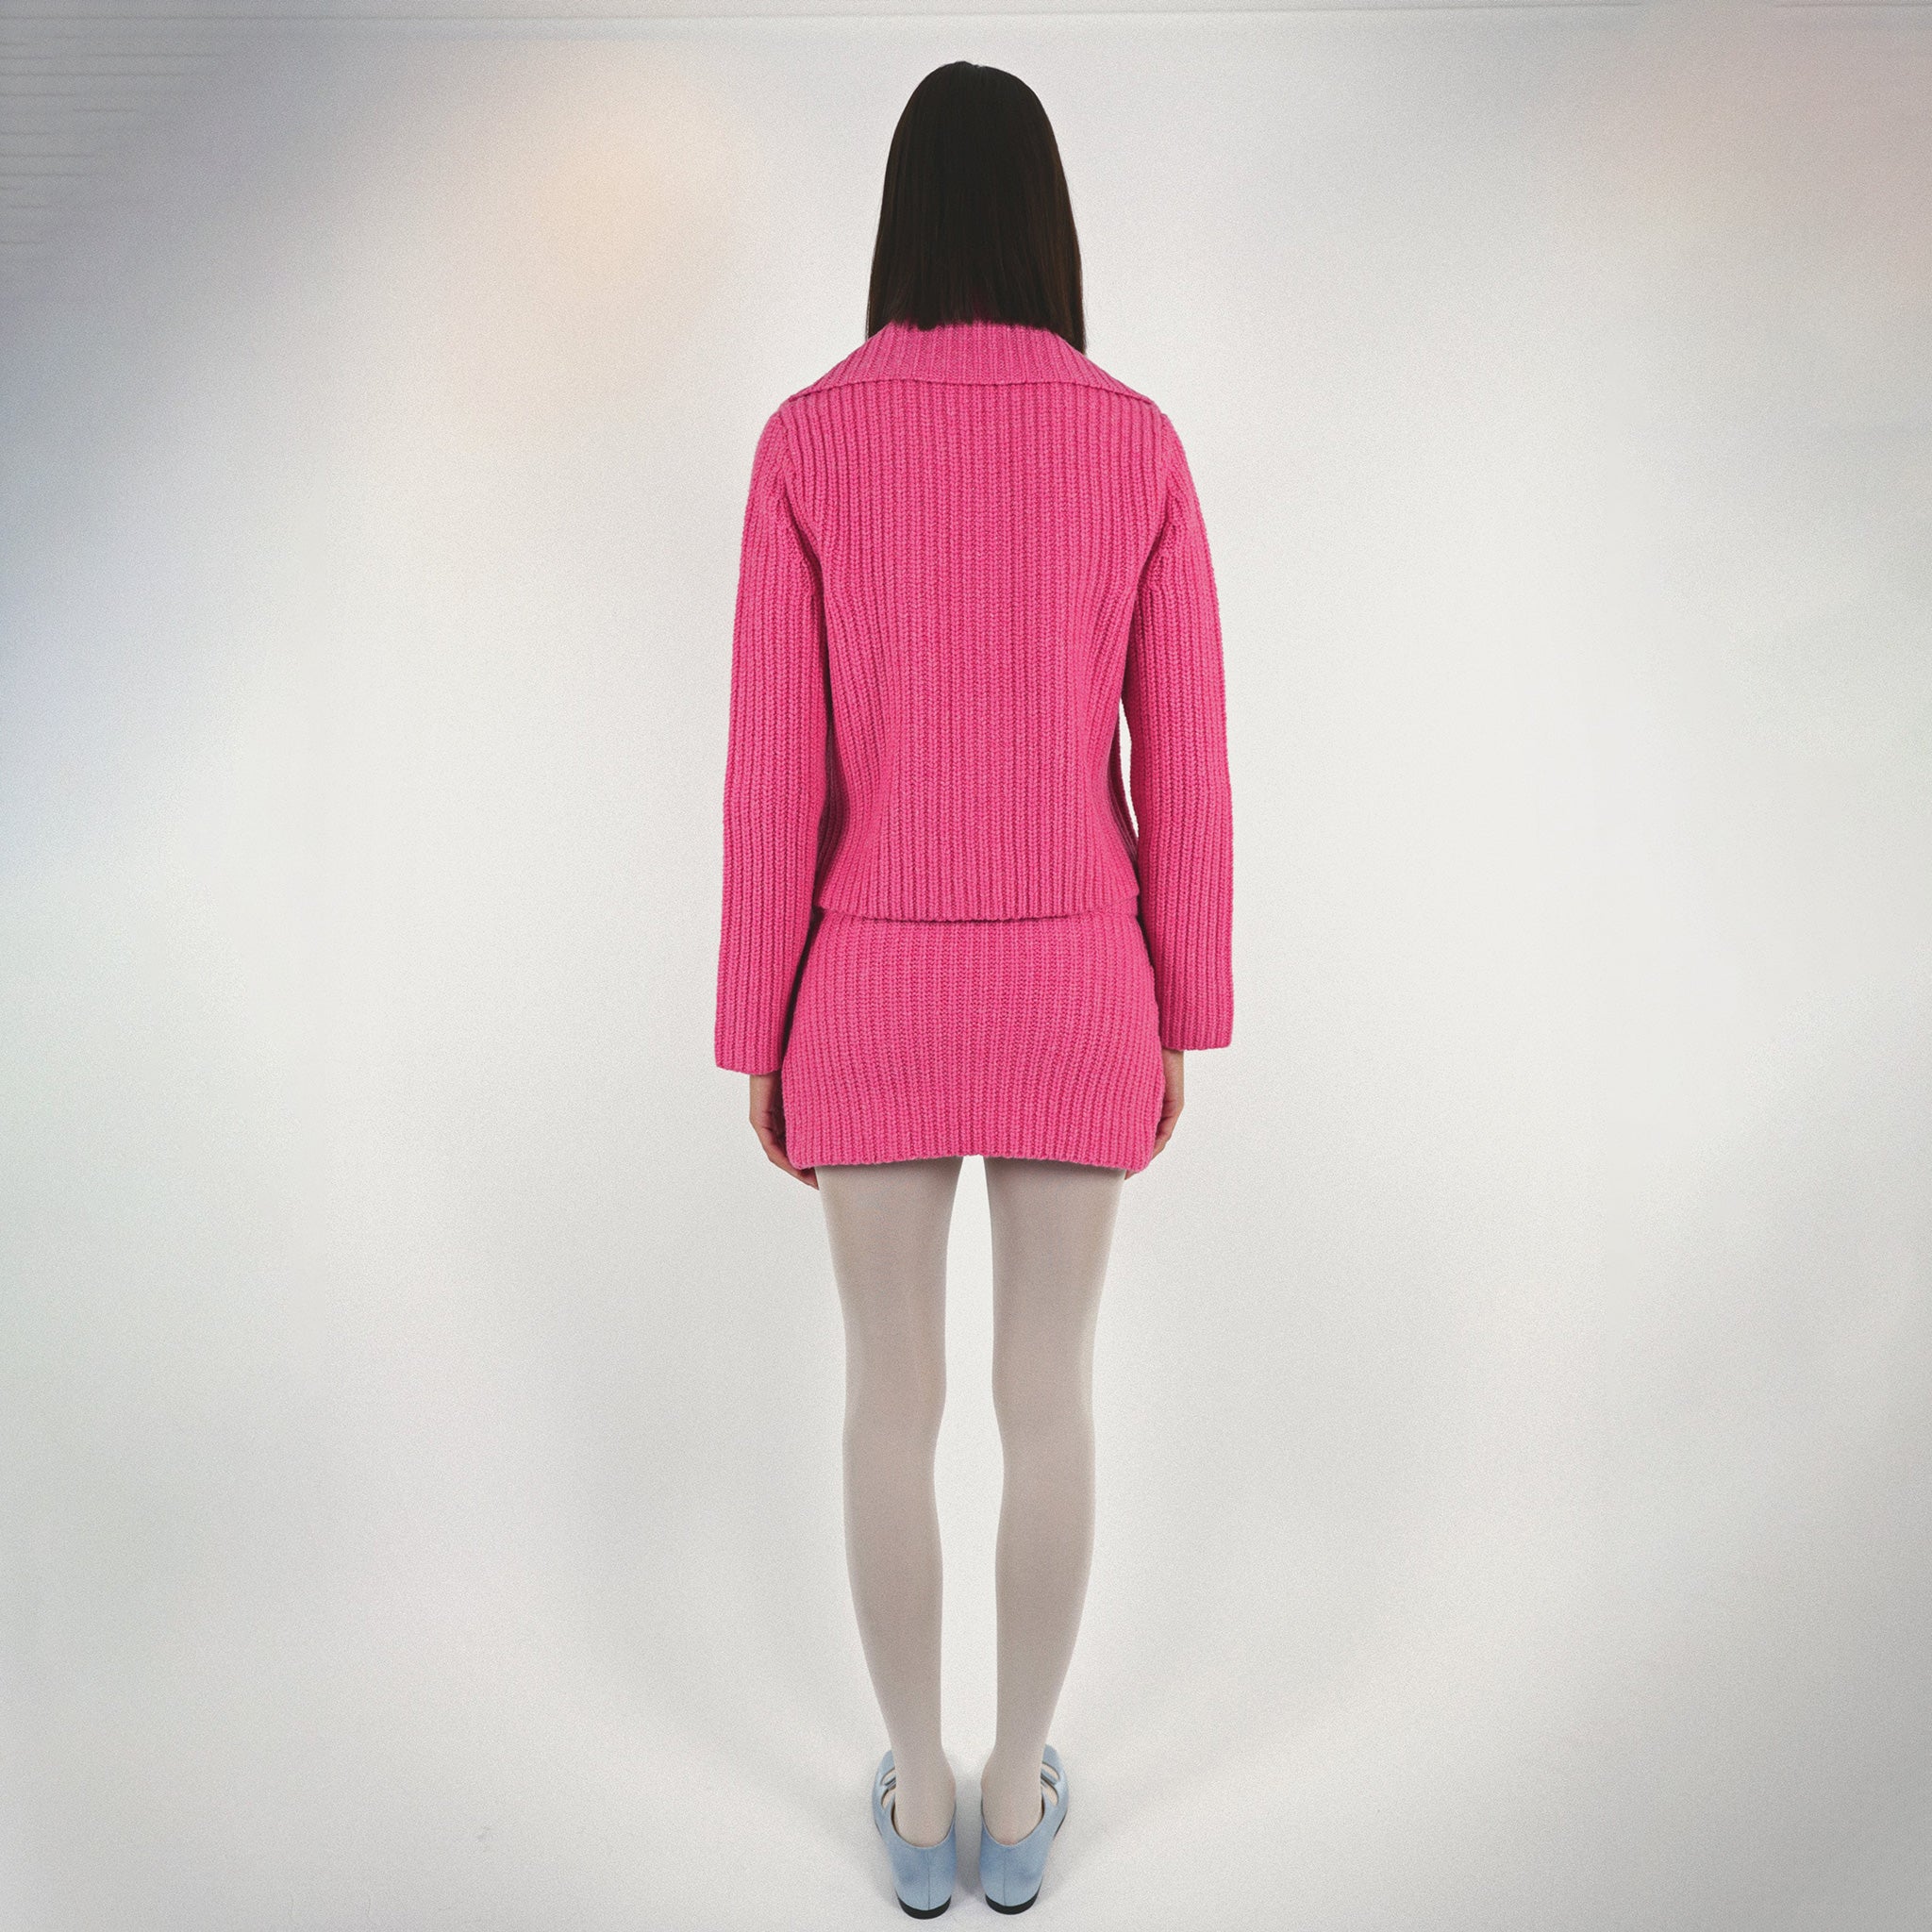 Back full body photo of model wearing the pink mini knit skirt.